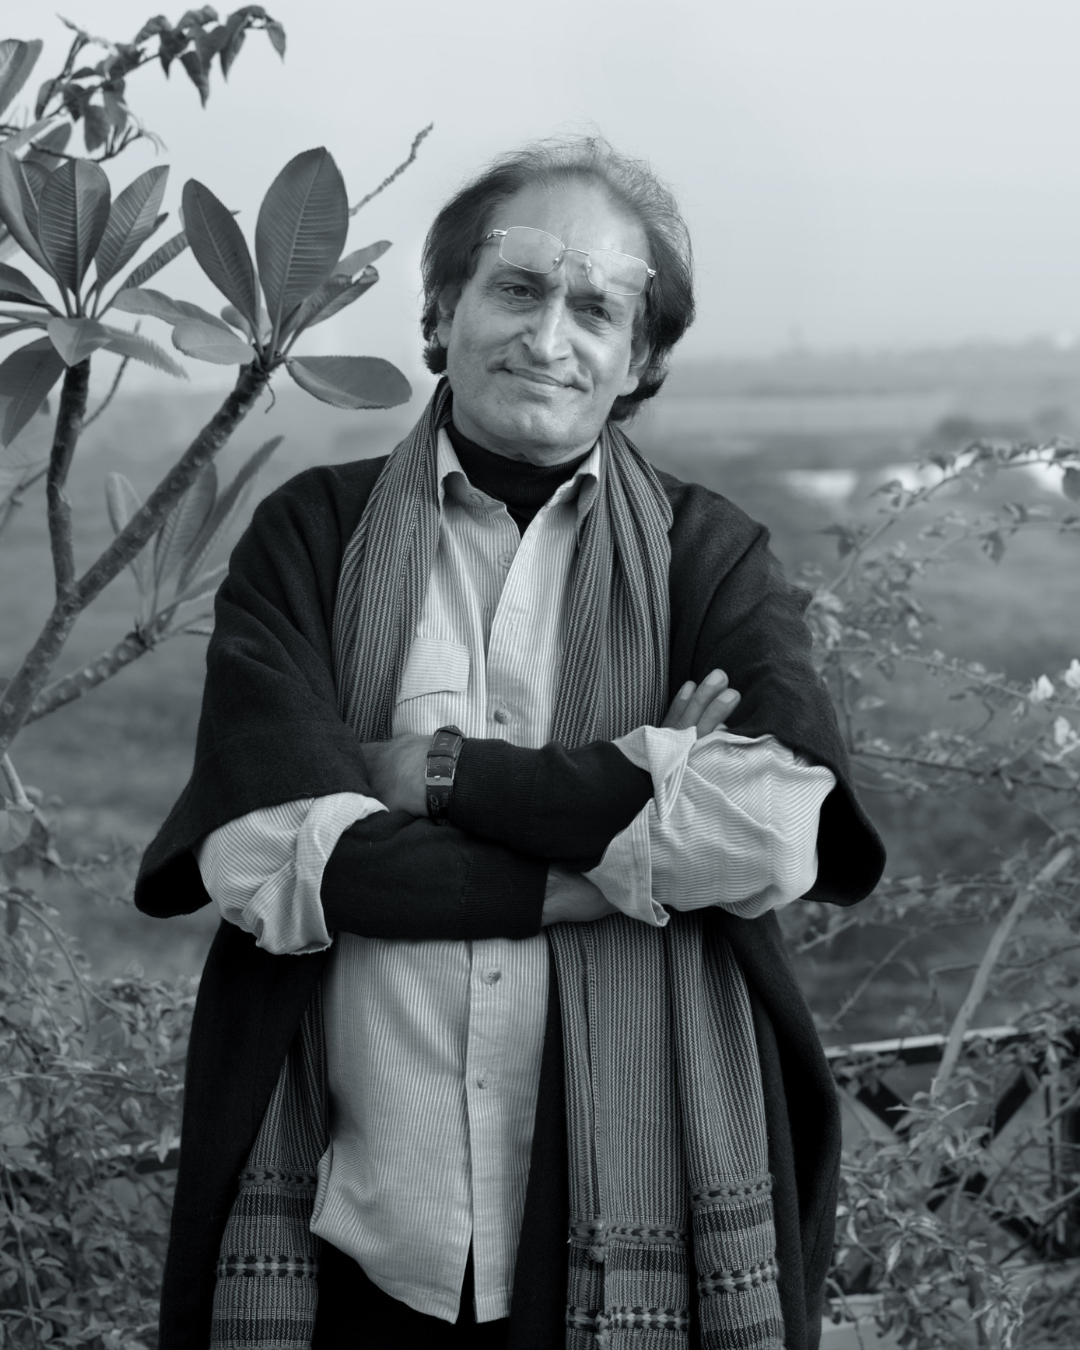 A portrait of the celebrated photographer, Raghu Rai. Courtesy of Raghu Rai Foundation